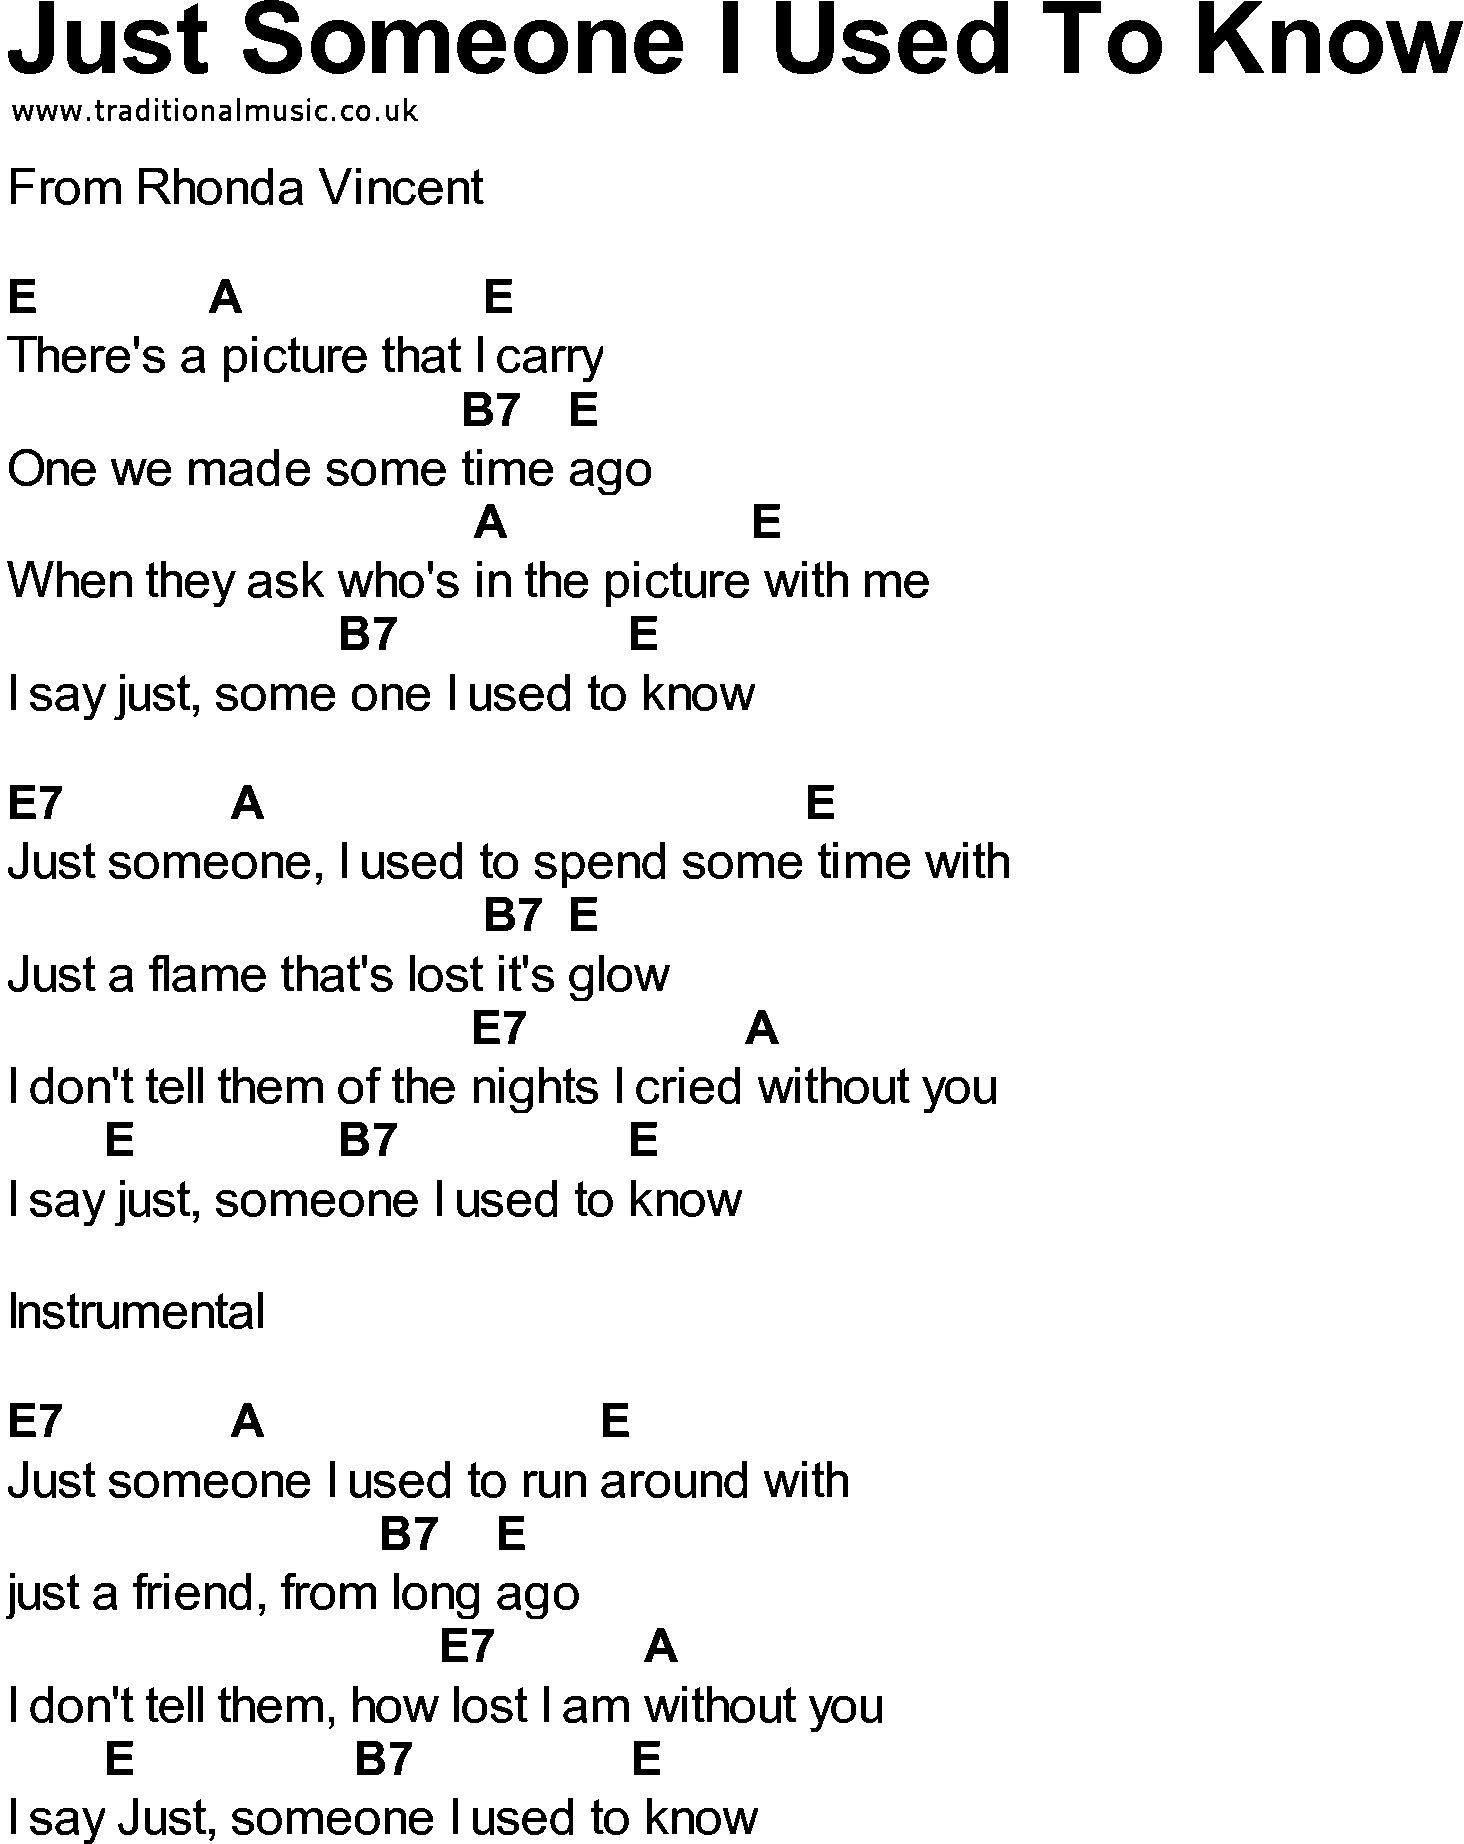 Song For Someone Lyrics | myideasbedroom.com1464 x 1844